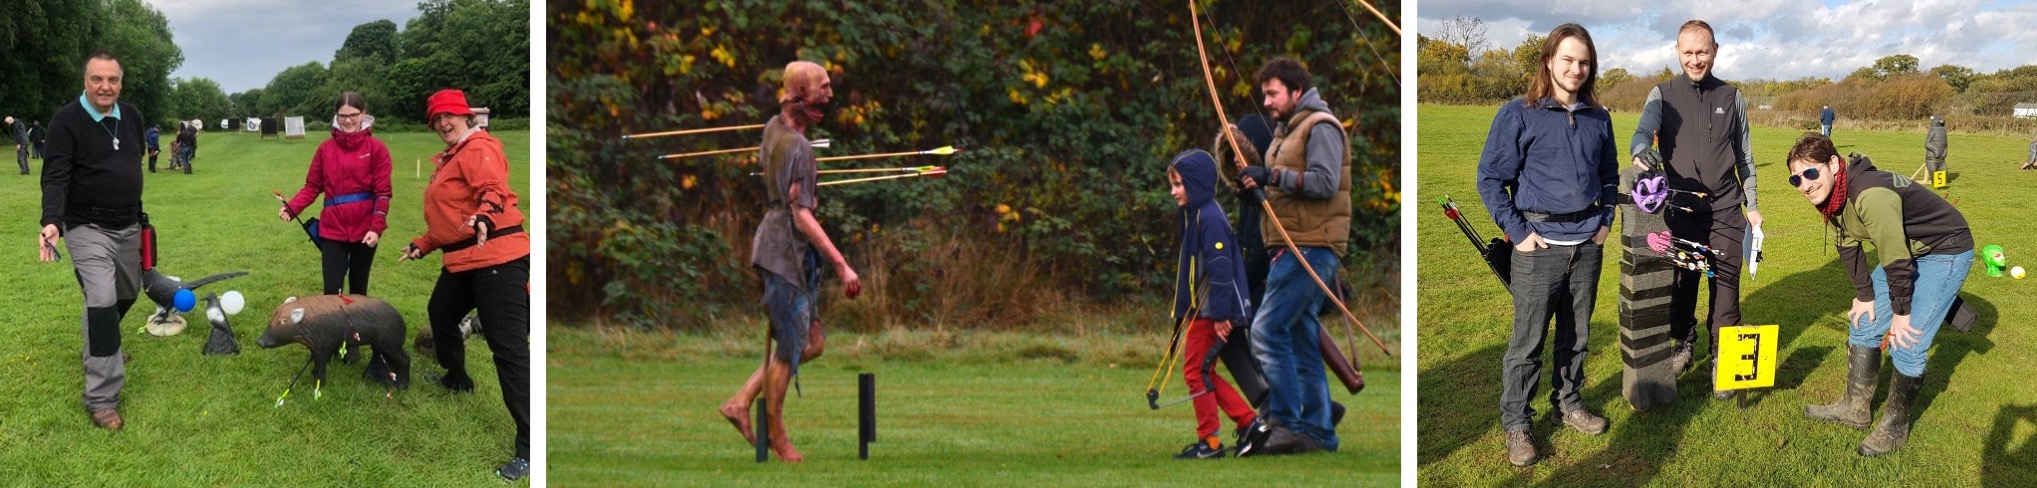 Chessington Archery Comps fun shootsjpg